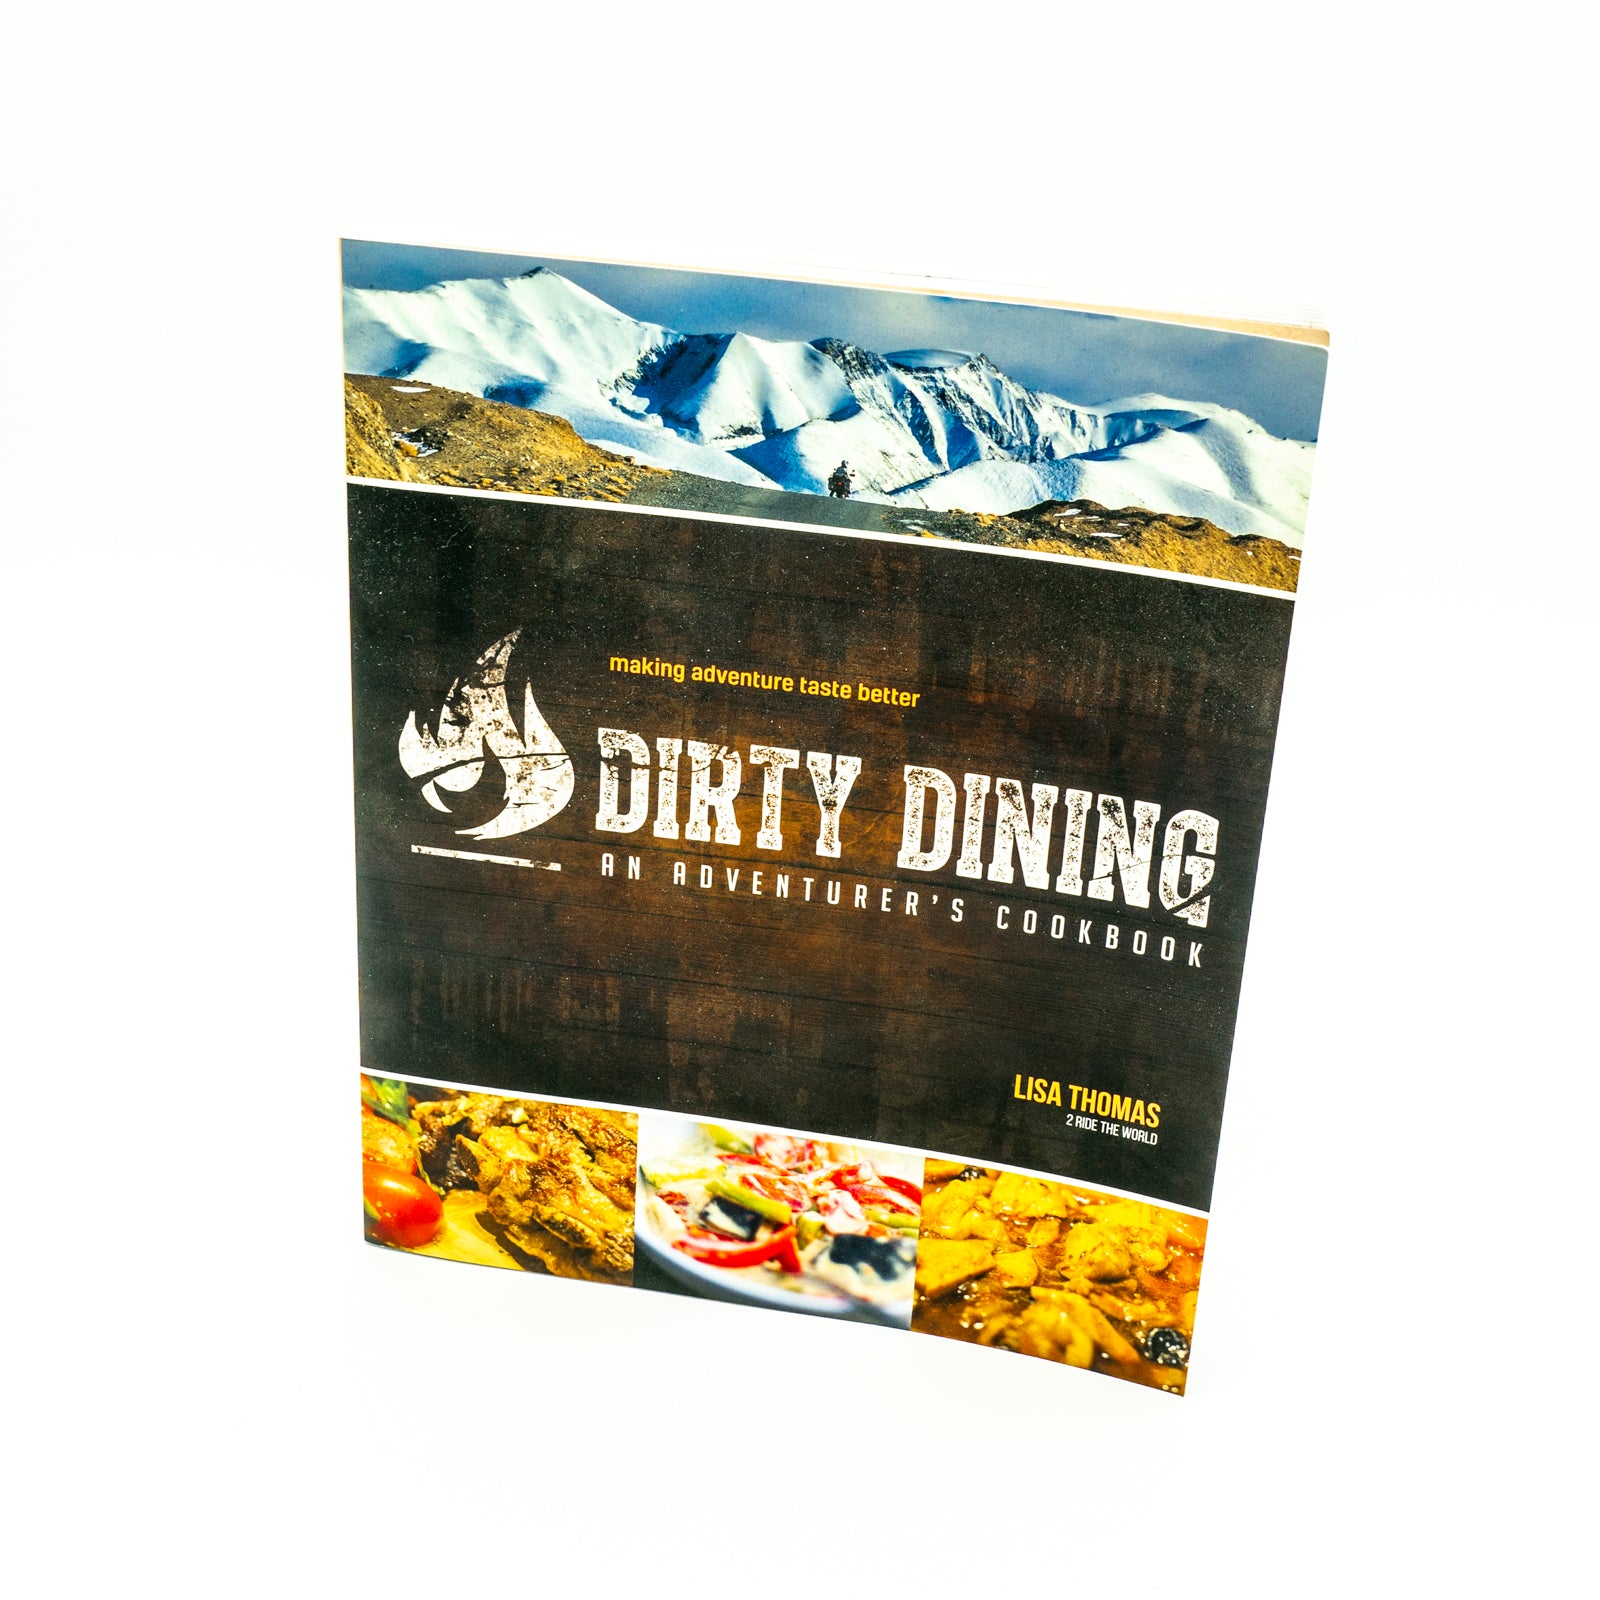 Dirty Dining An Adventurere's Cookbook